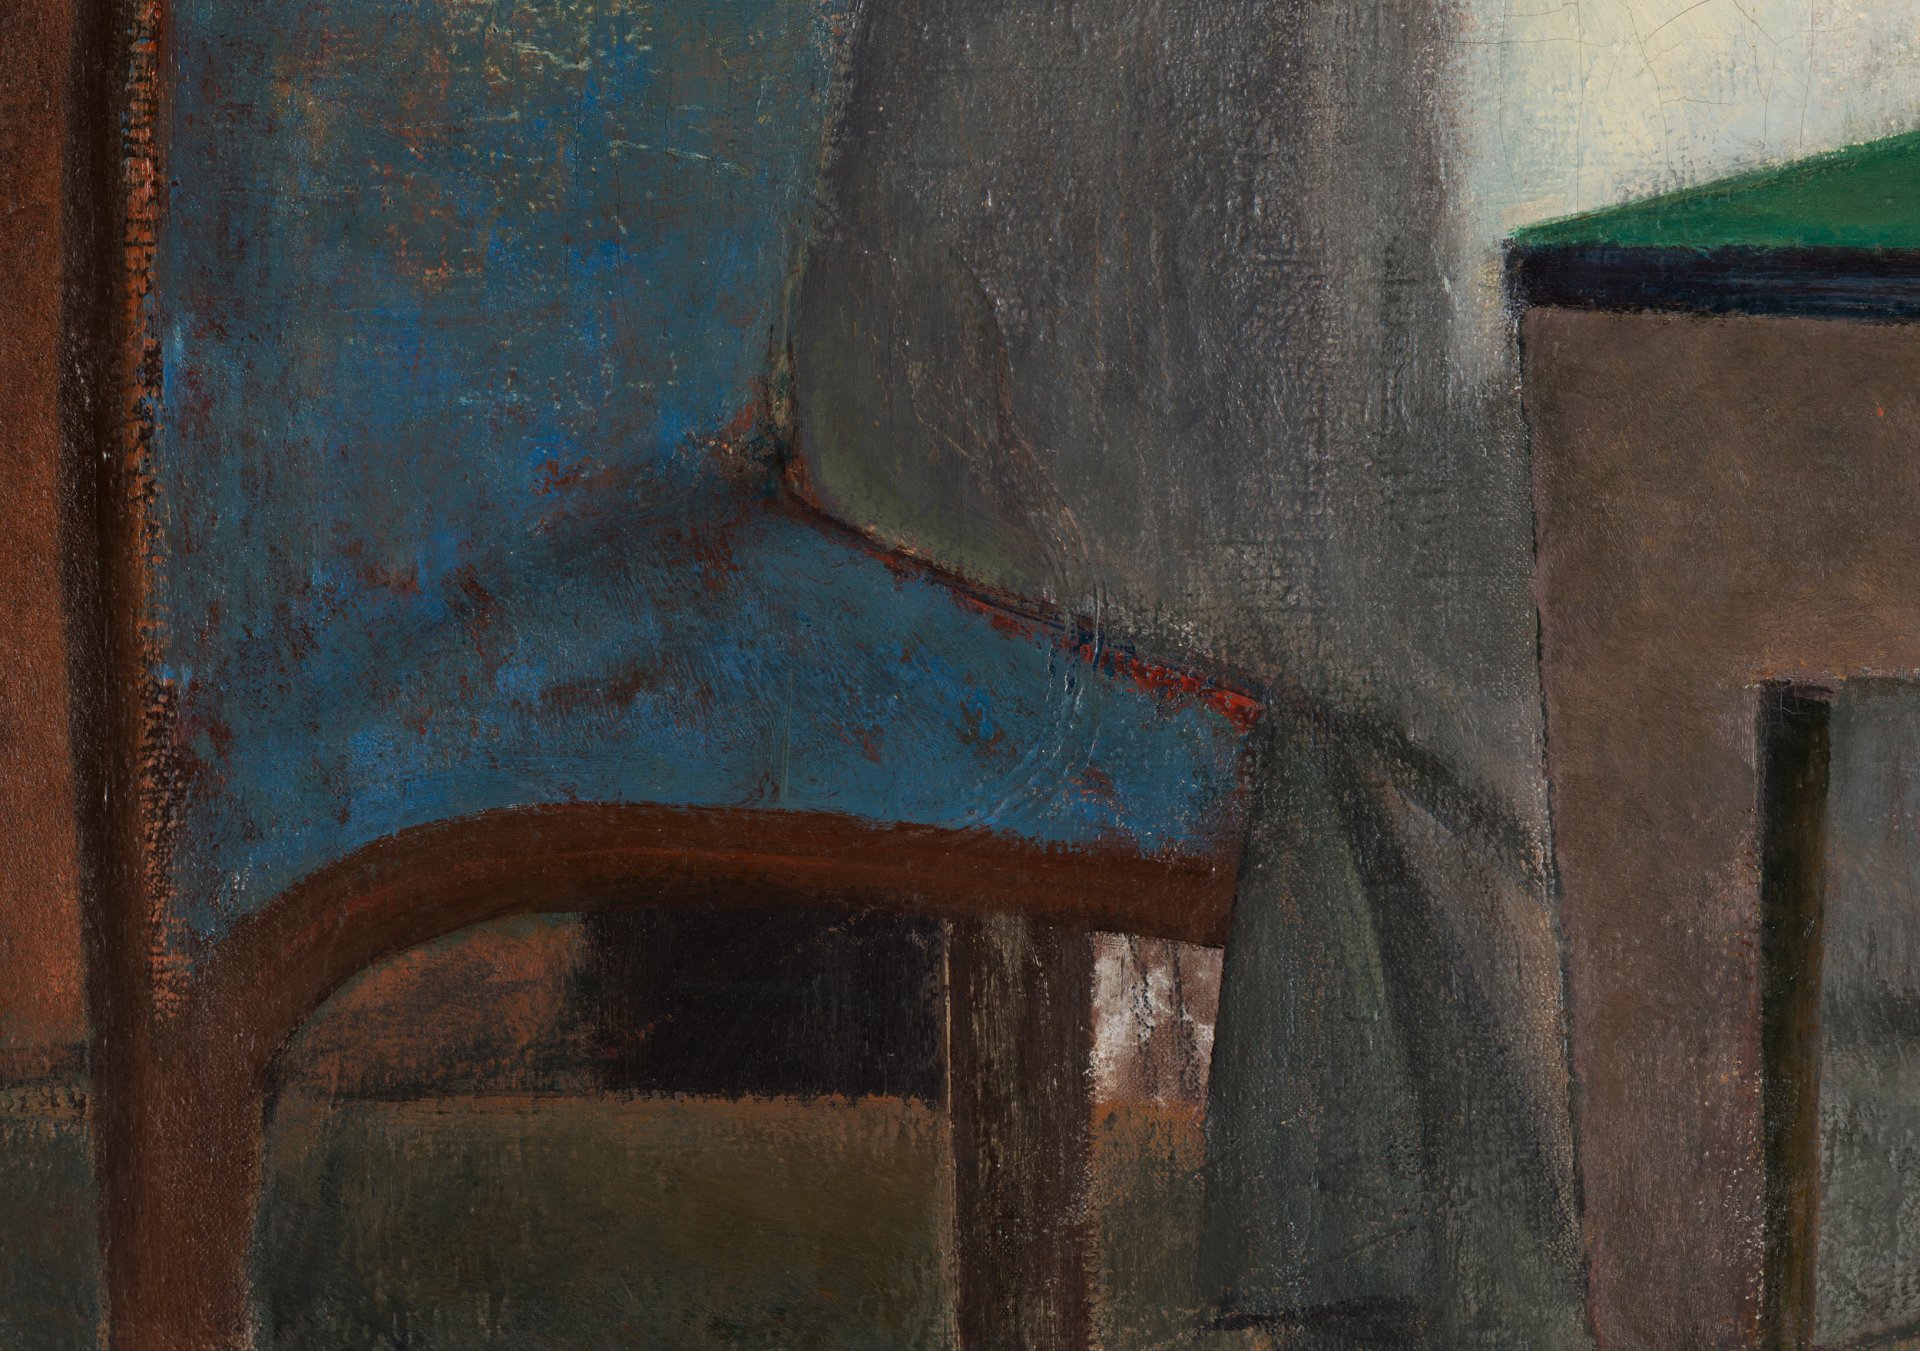 Detalle de la imagen de la obra de Balthus, “La partida de naipes”, 1948- 1950